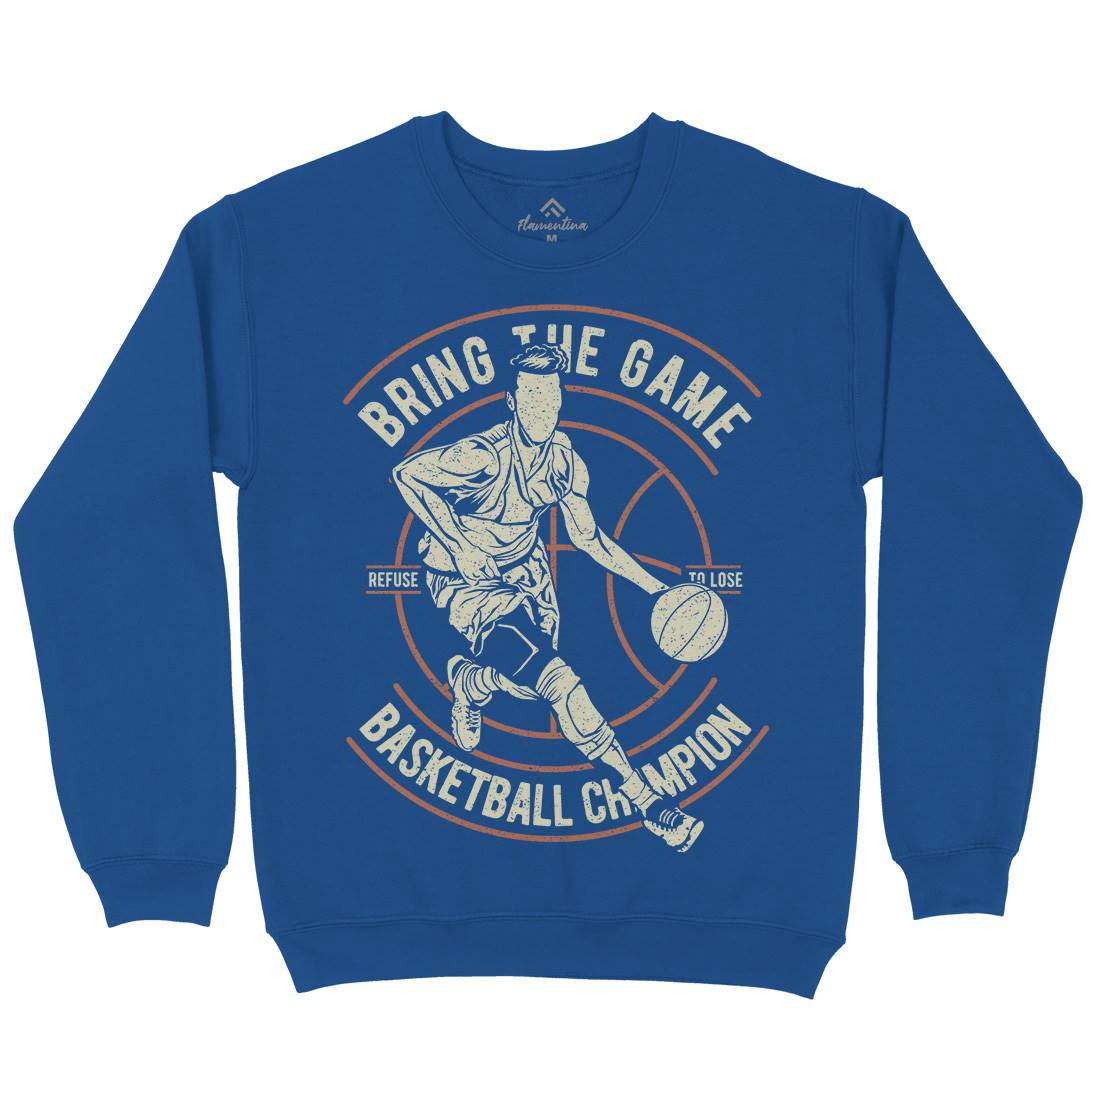 Bring The Game Kids Crew Neck Sweatshirt Sport A627